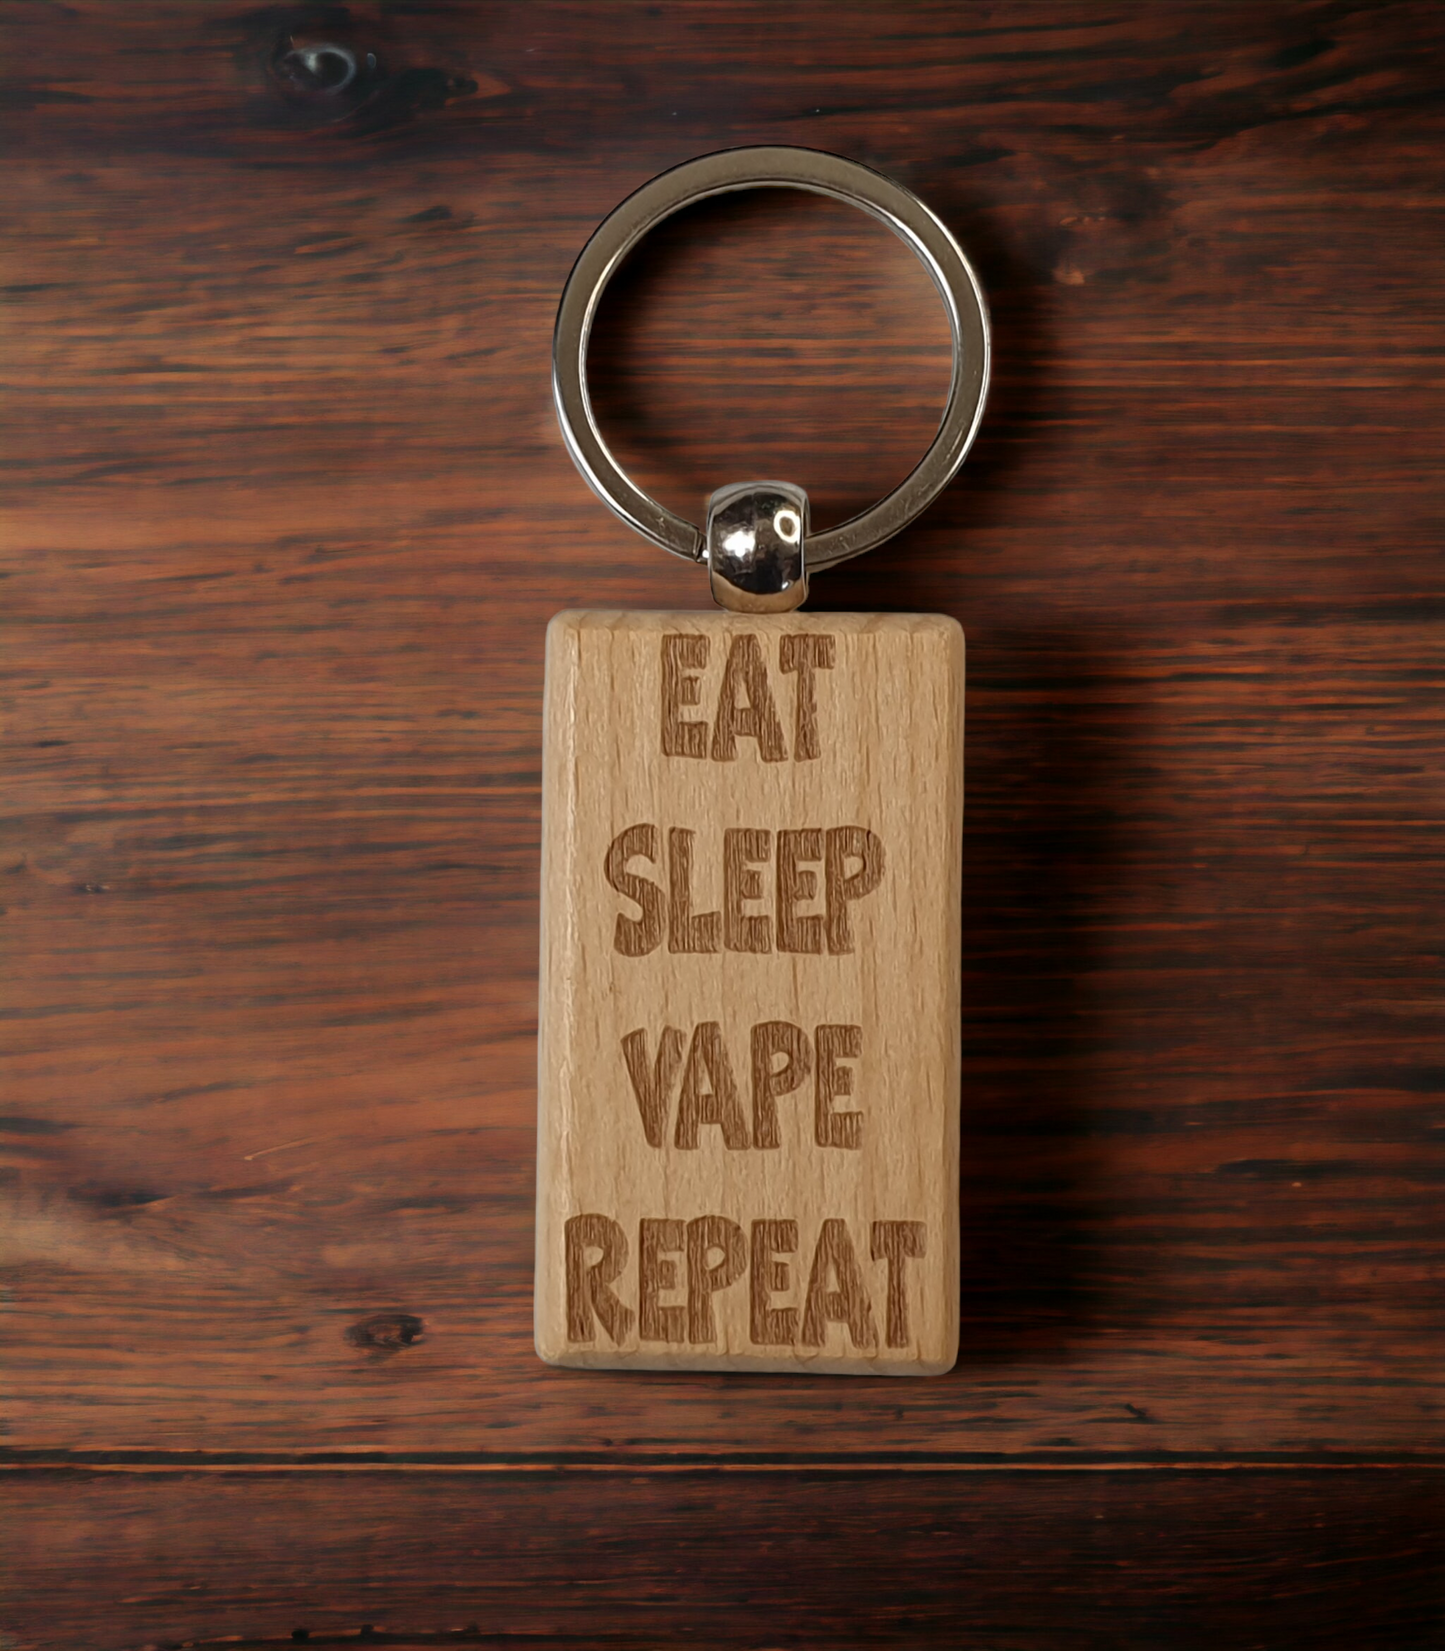 Vaping Keyring Gift - Eat Sleep Vape Repeat - Nice Cute Engraved Wooden Key Fob Novelty Present